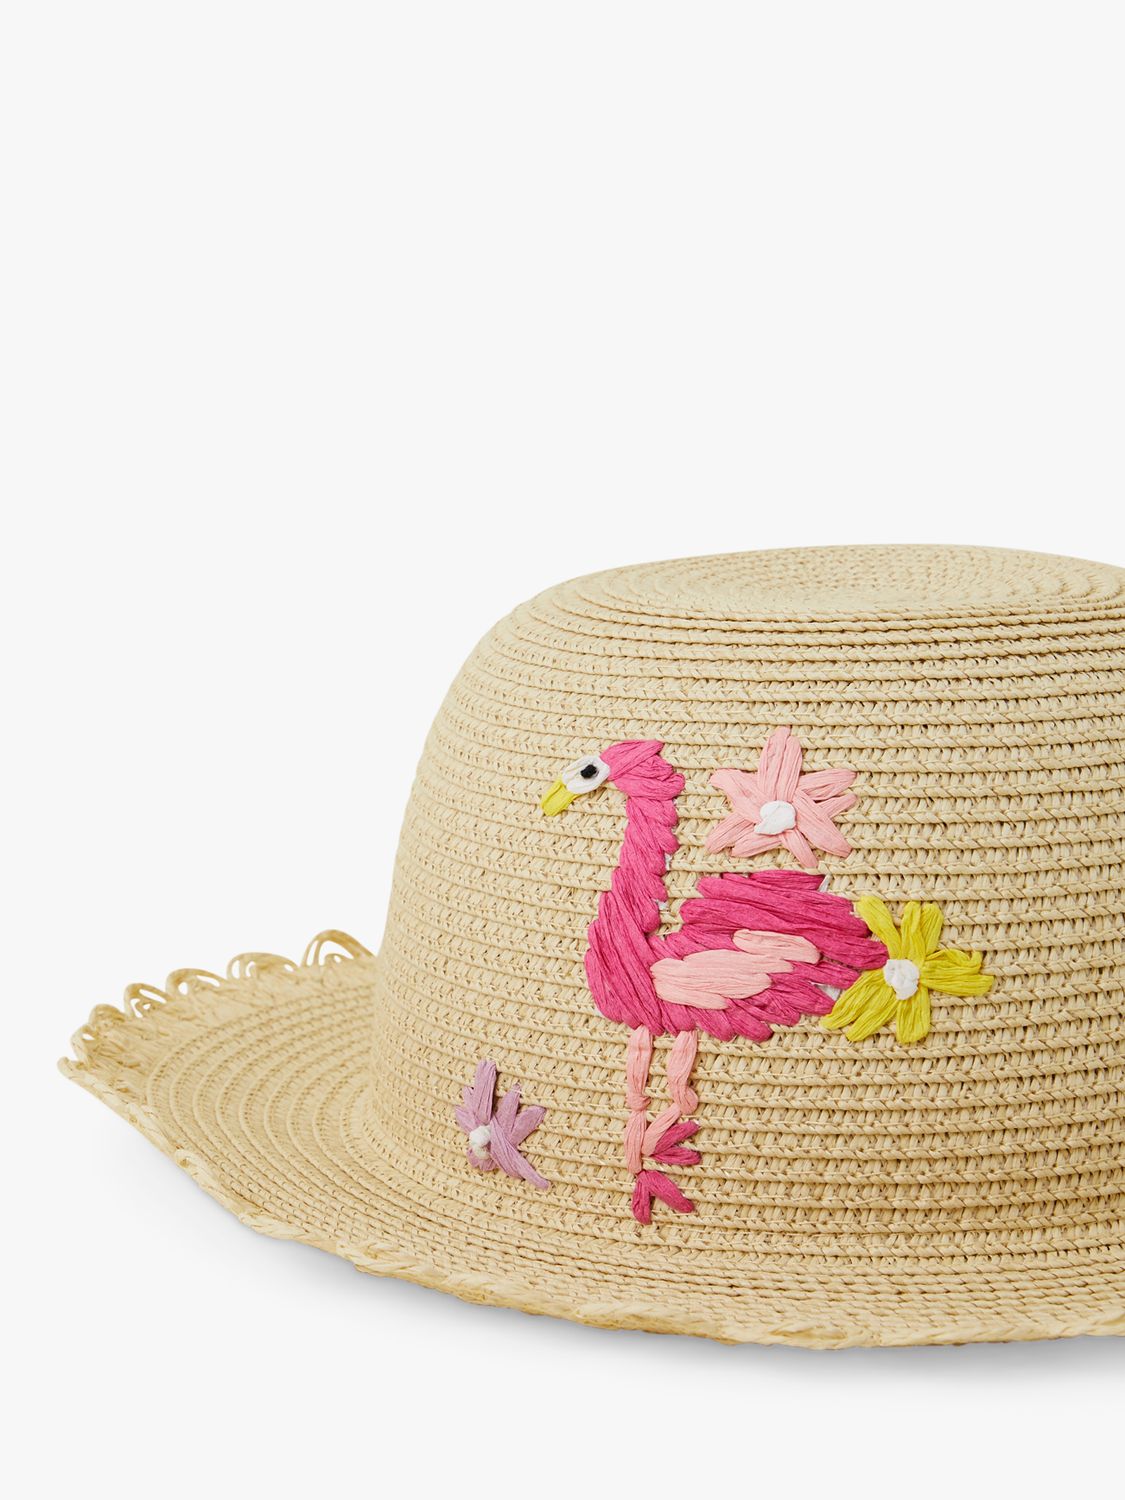 Angels by Accessorize Kids' Flamingo Floppy Sun Hat, Multi, One Size